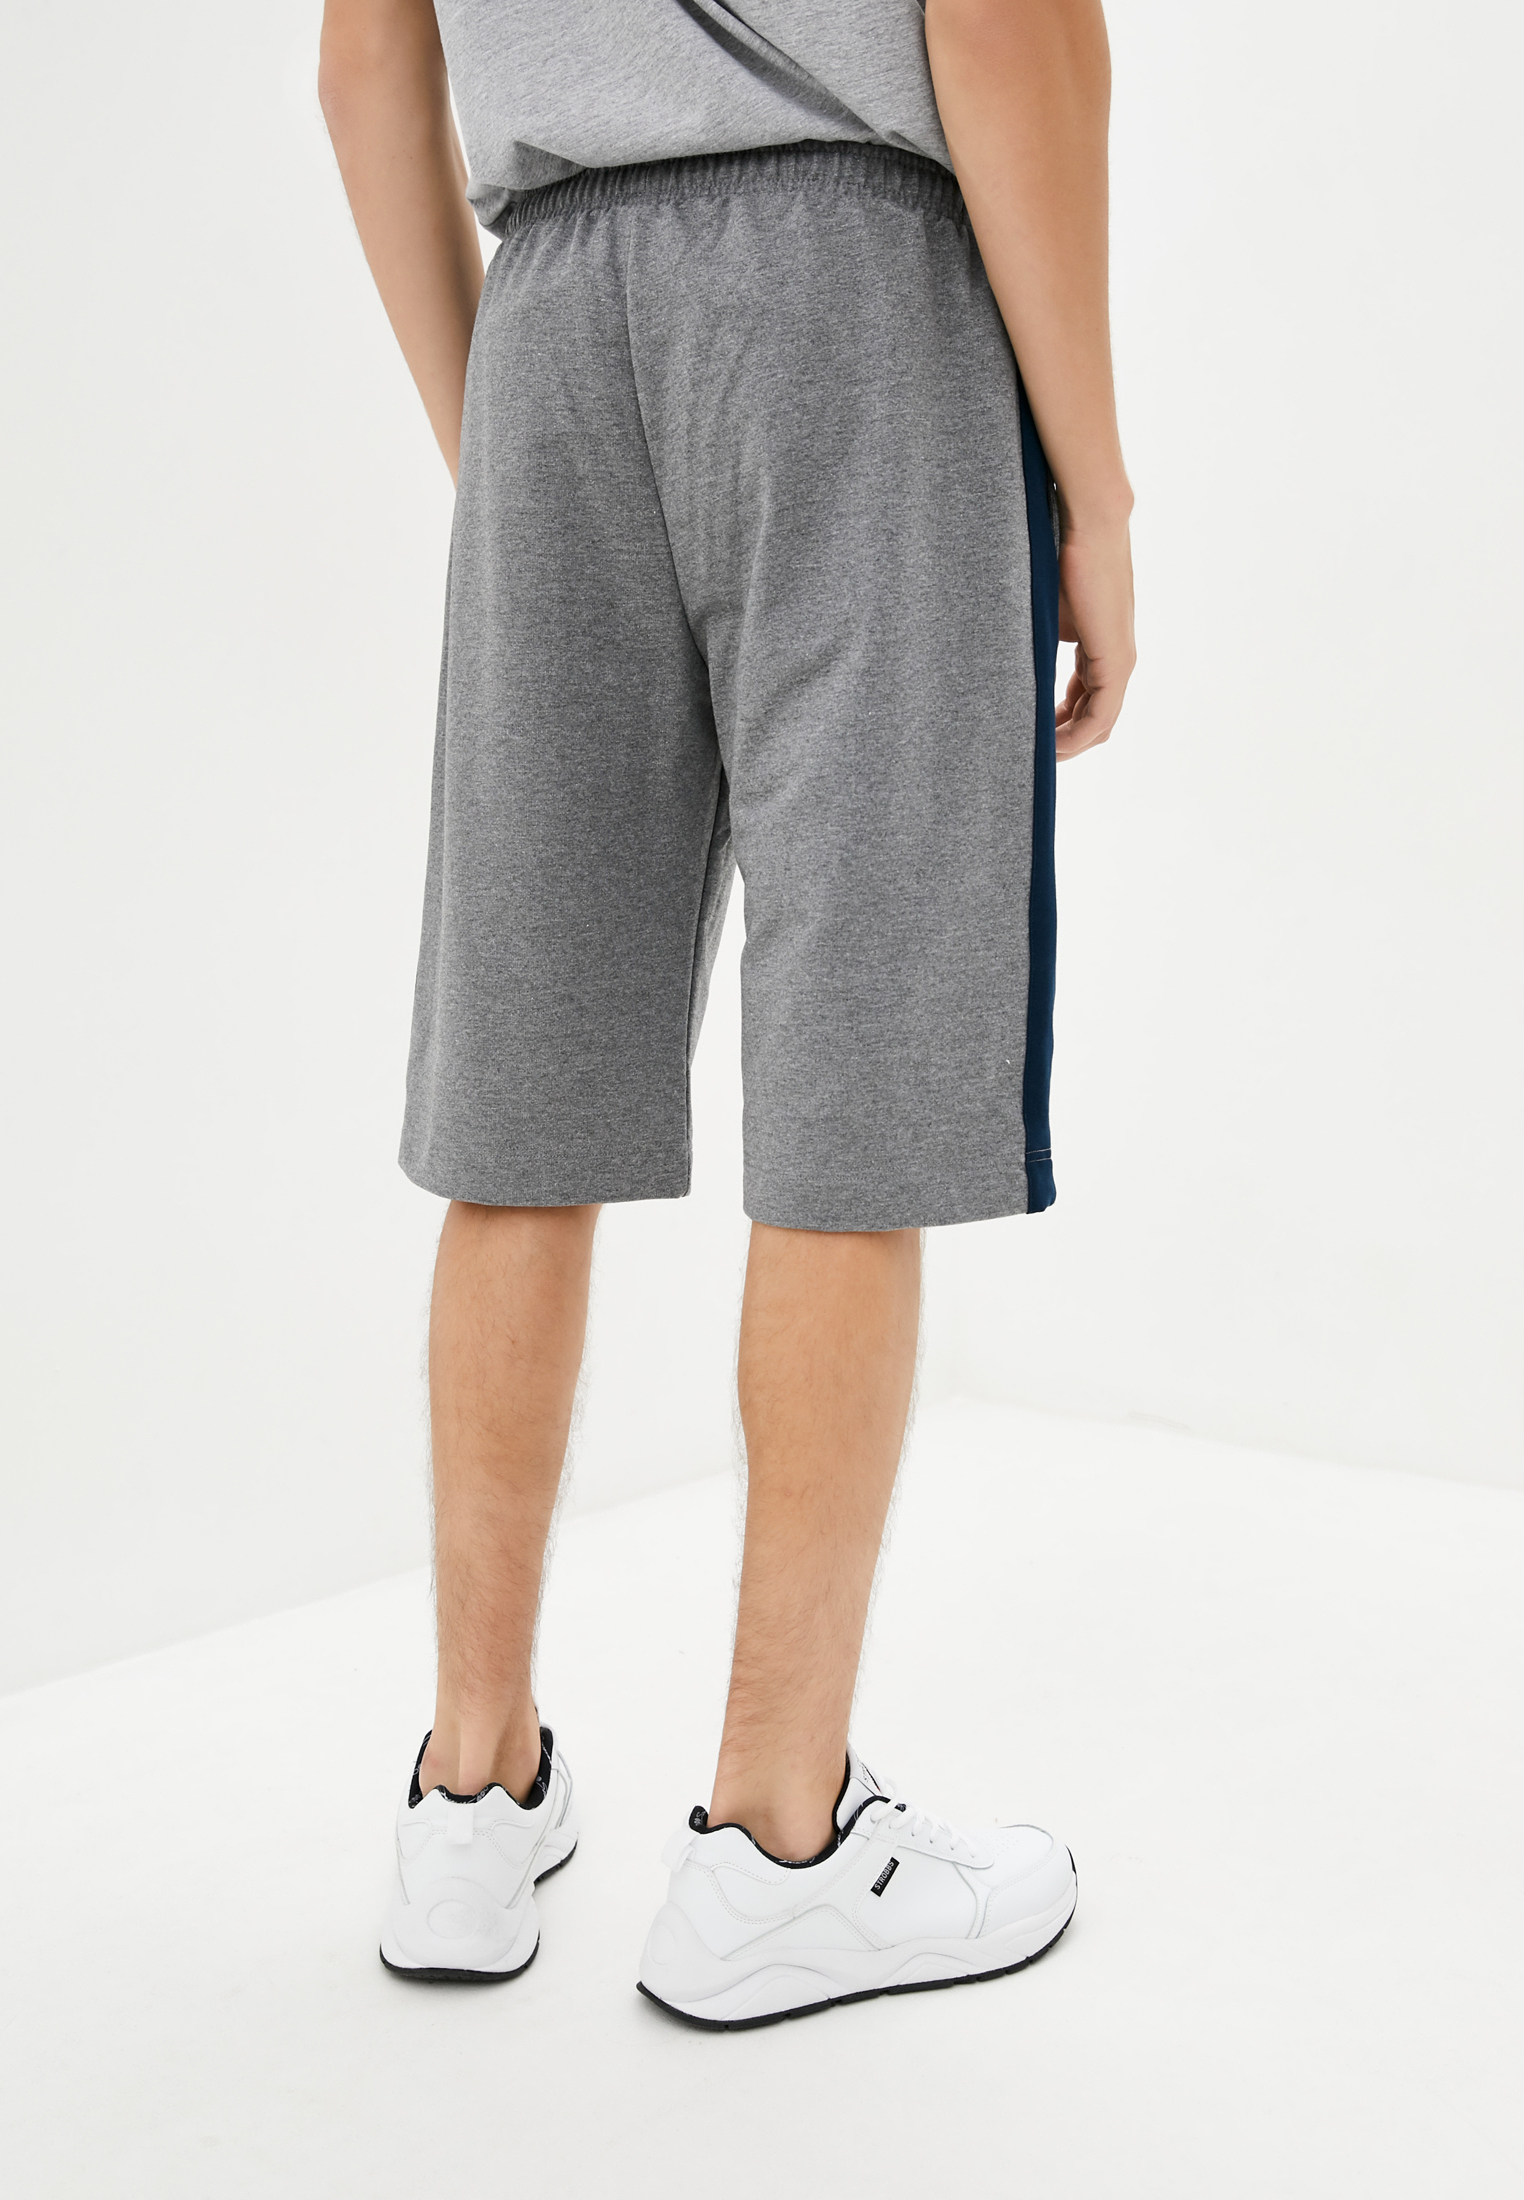 Shorts, vendor code: 1090-11, color: Dark gray melange